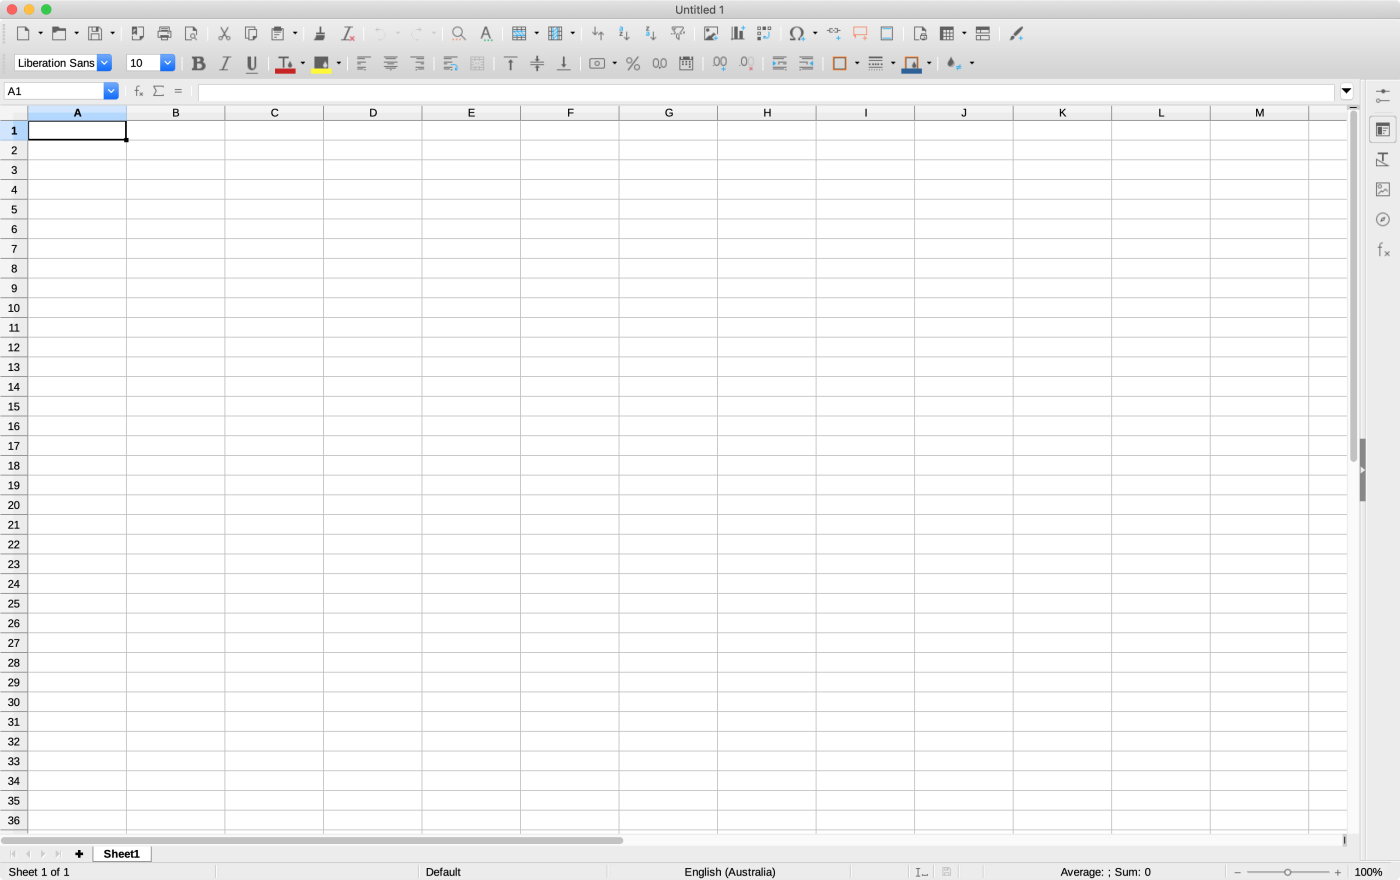 LibreOffice screenshot of blank spreadsheet